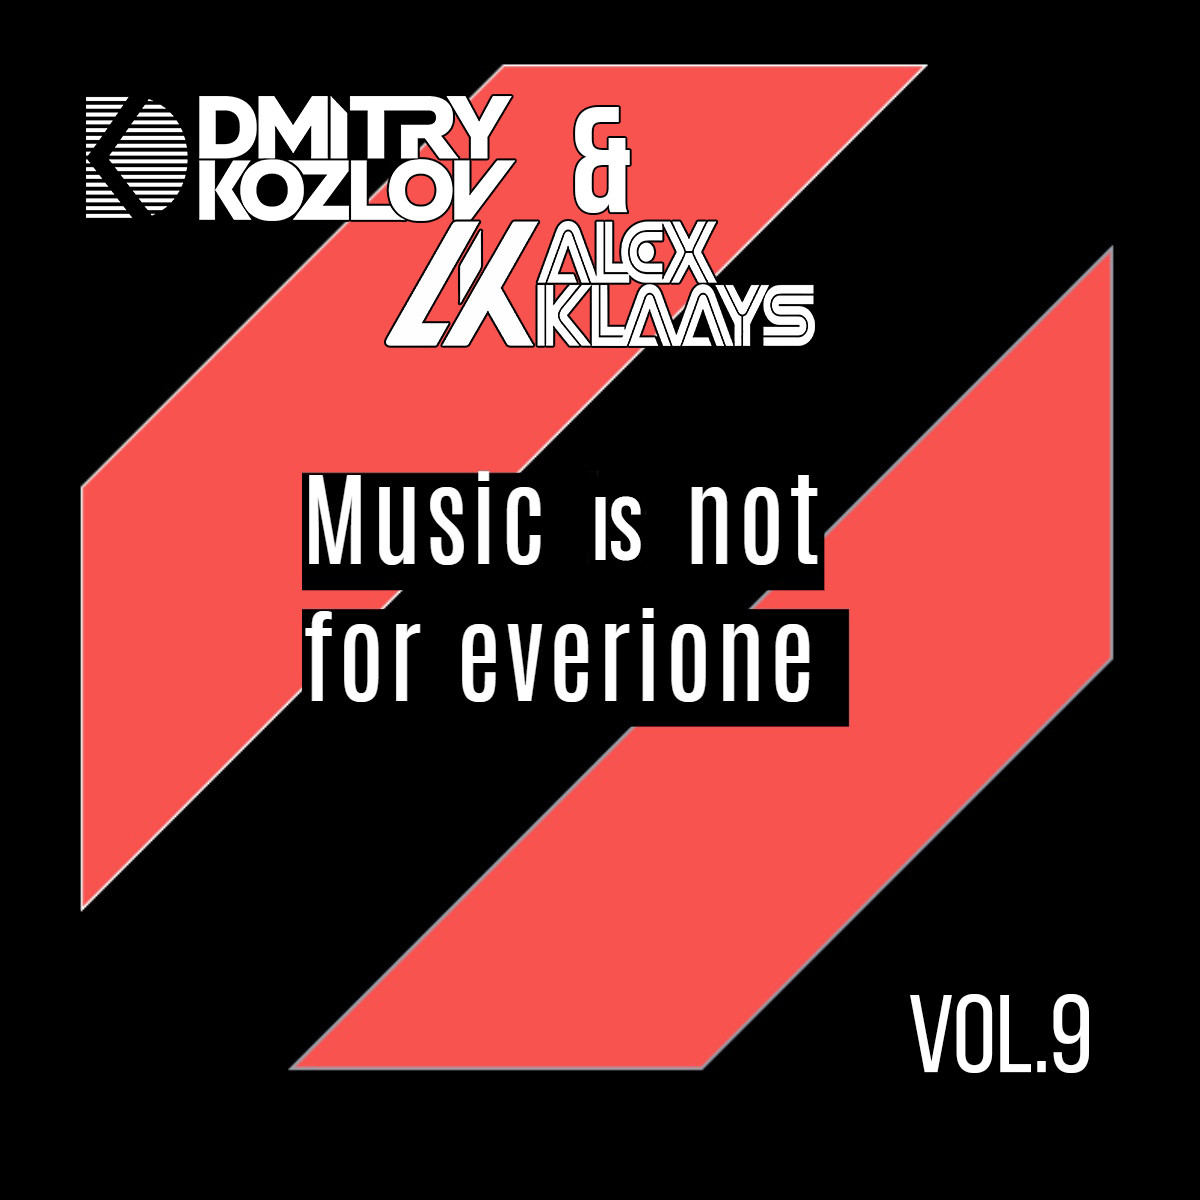 DJ DMITRY KOZLOV & DJ ALEX KLAAYS - MUSIC IS NOT FOR EVERYONE vol.9 (BEST INDIE DANCE & MELODIC TECHNO)